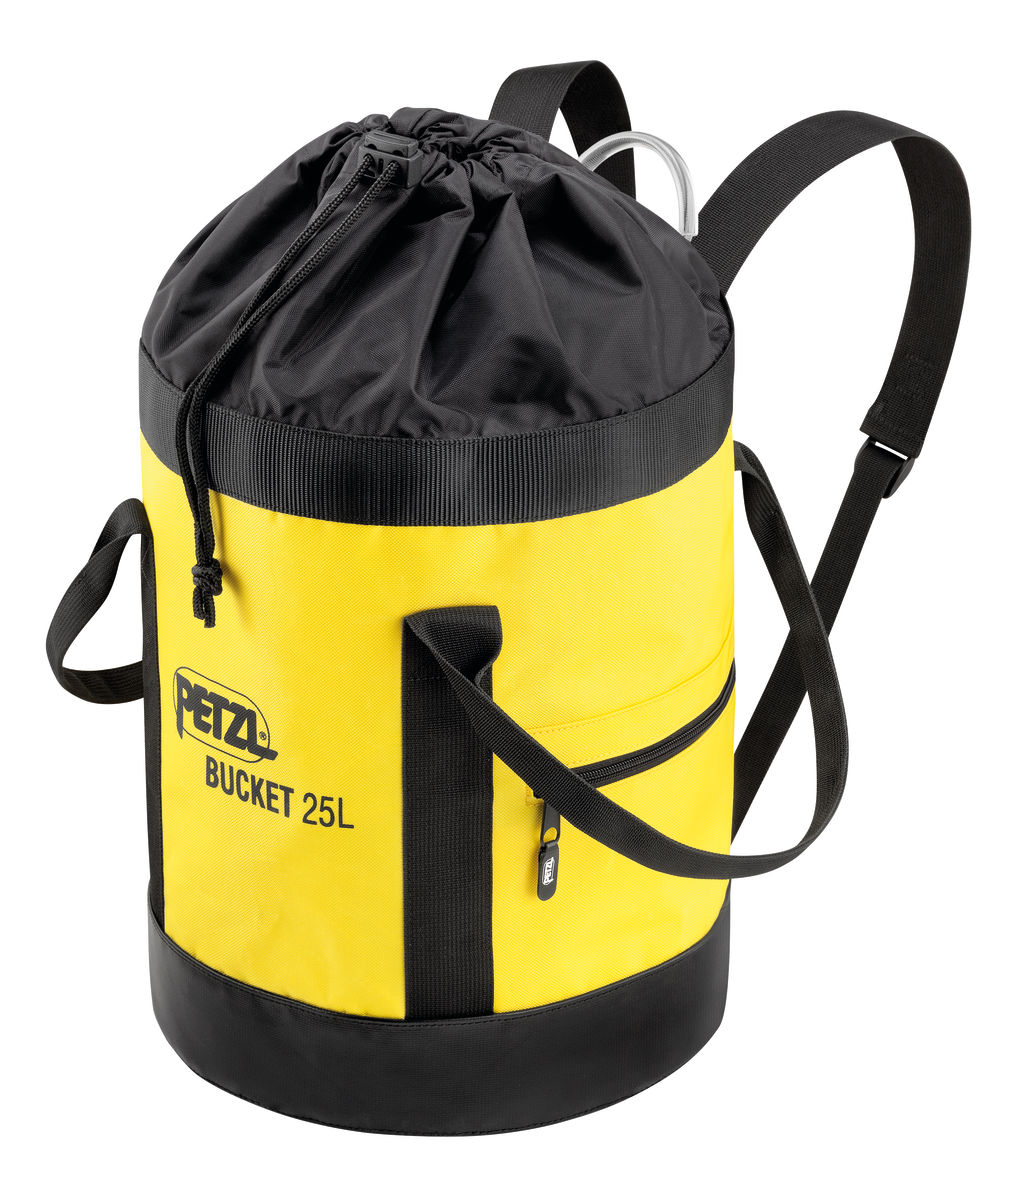 Petzl Bucket Rope Bag - Textile